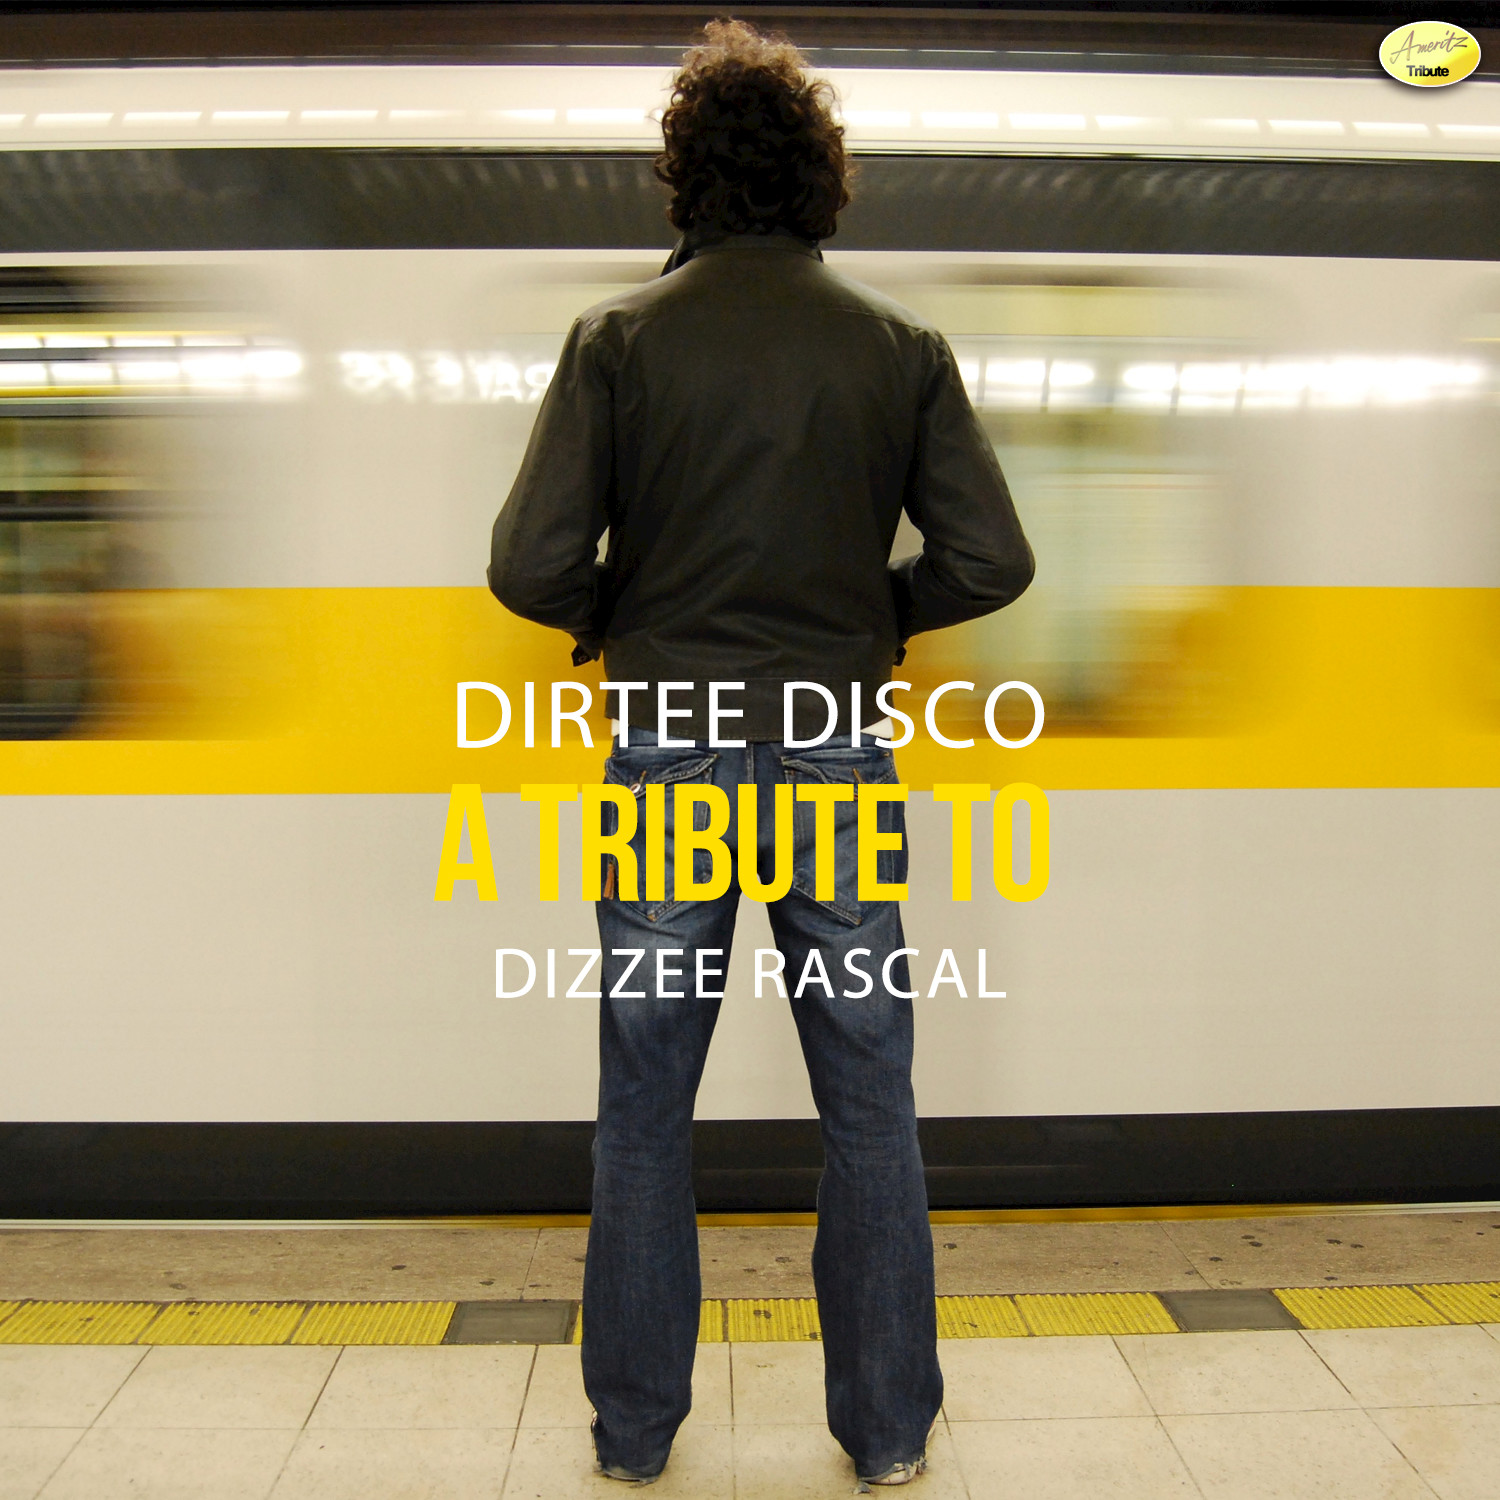 Dirtee Disco - A Tribute to Dizzee Rascal